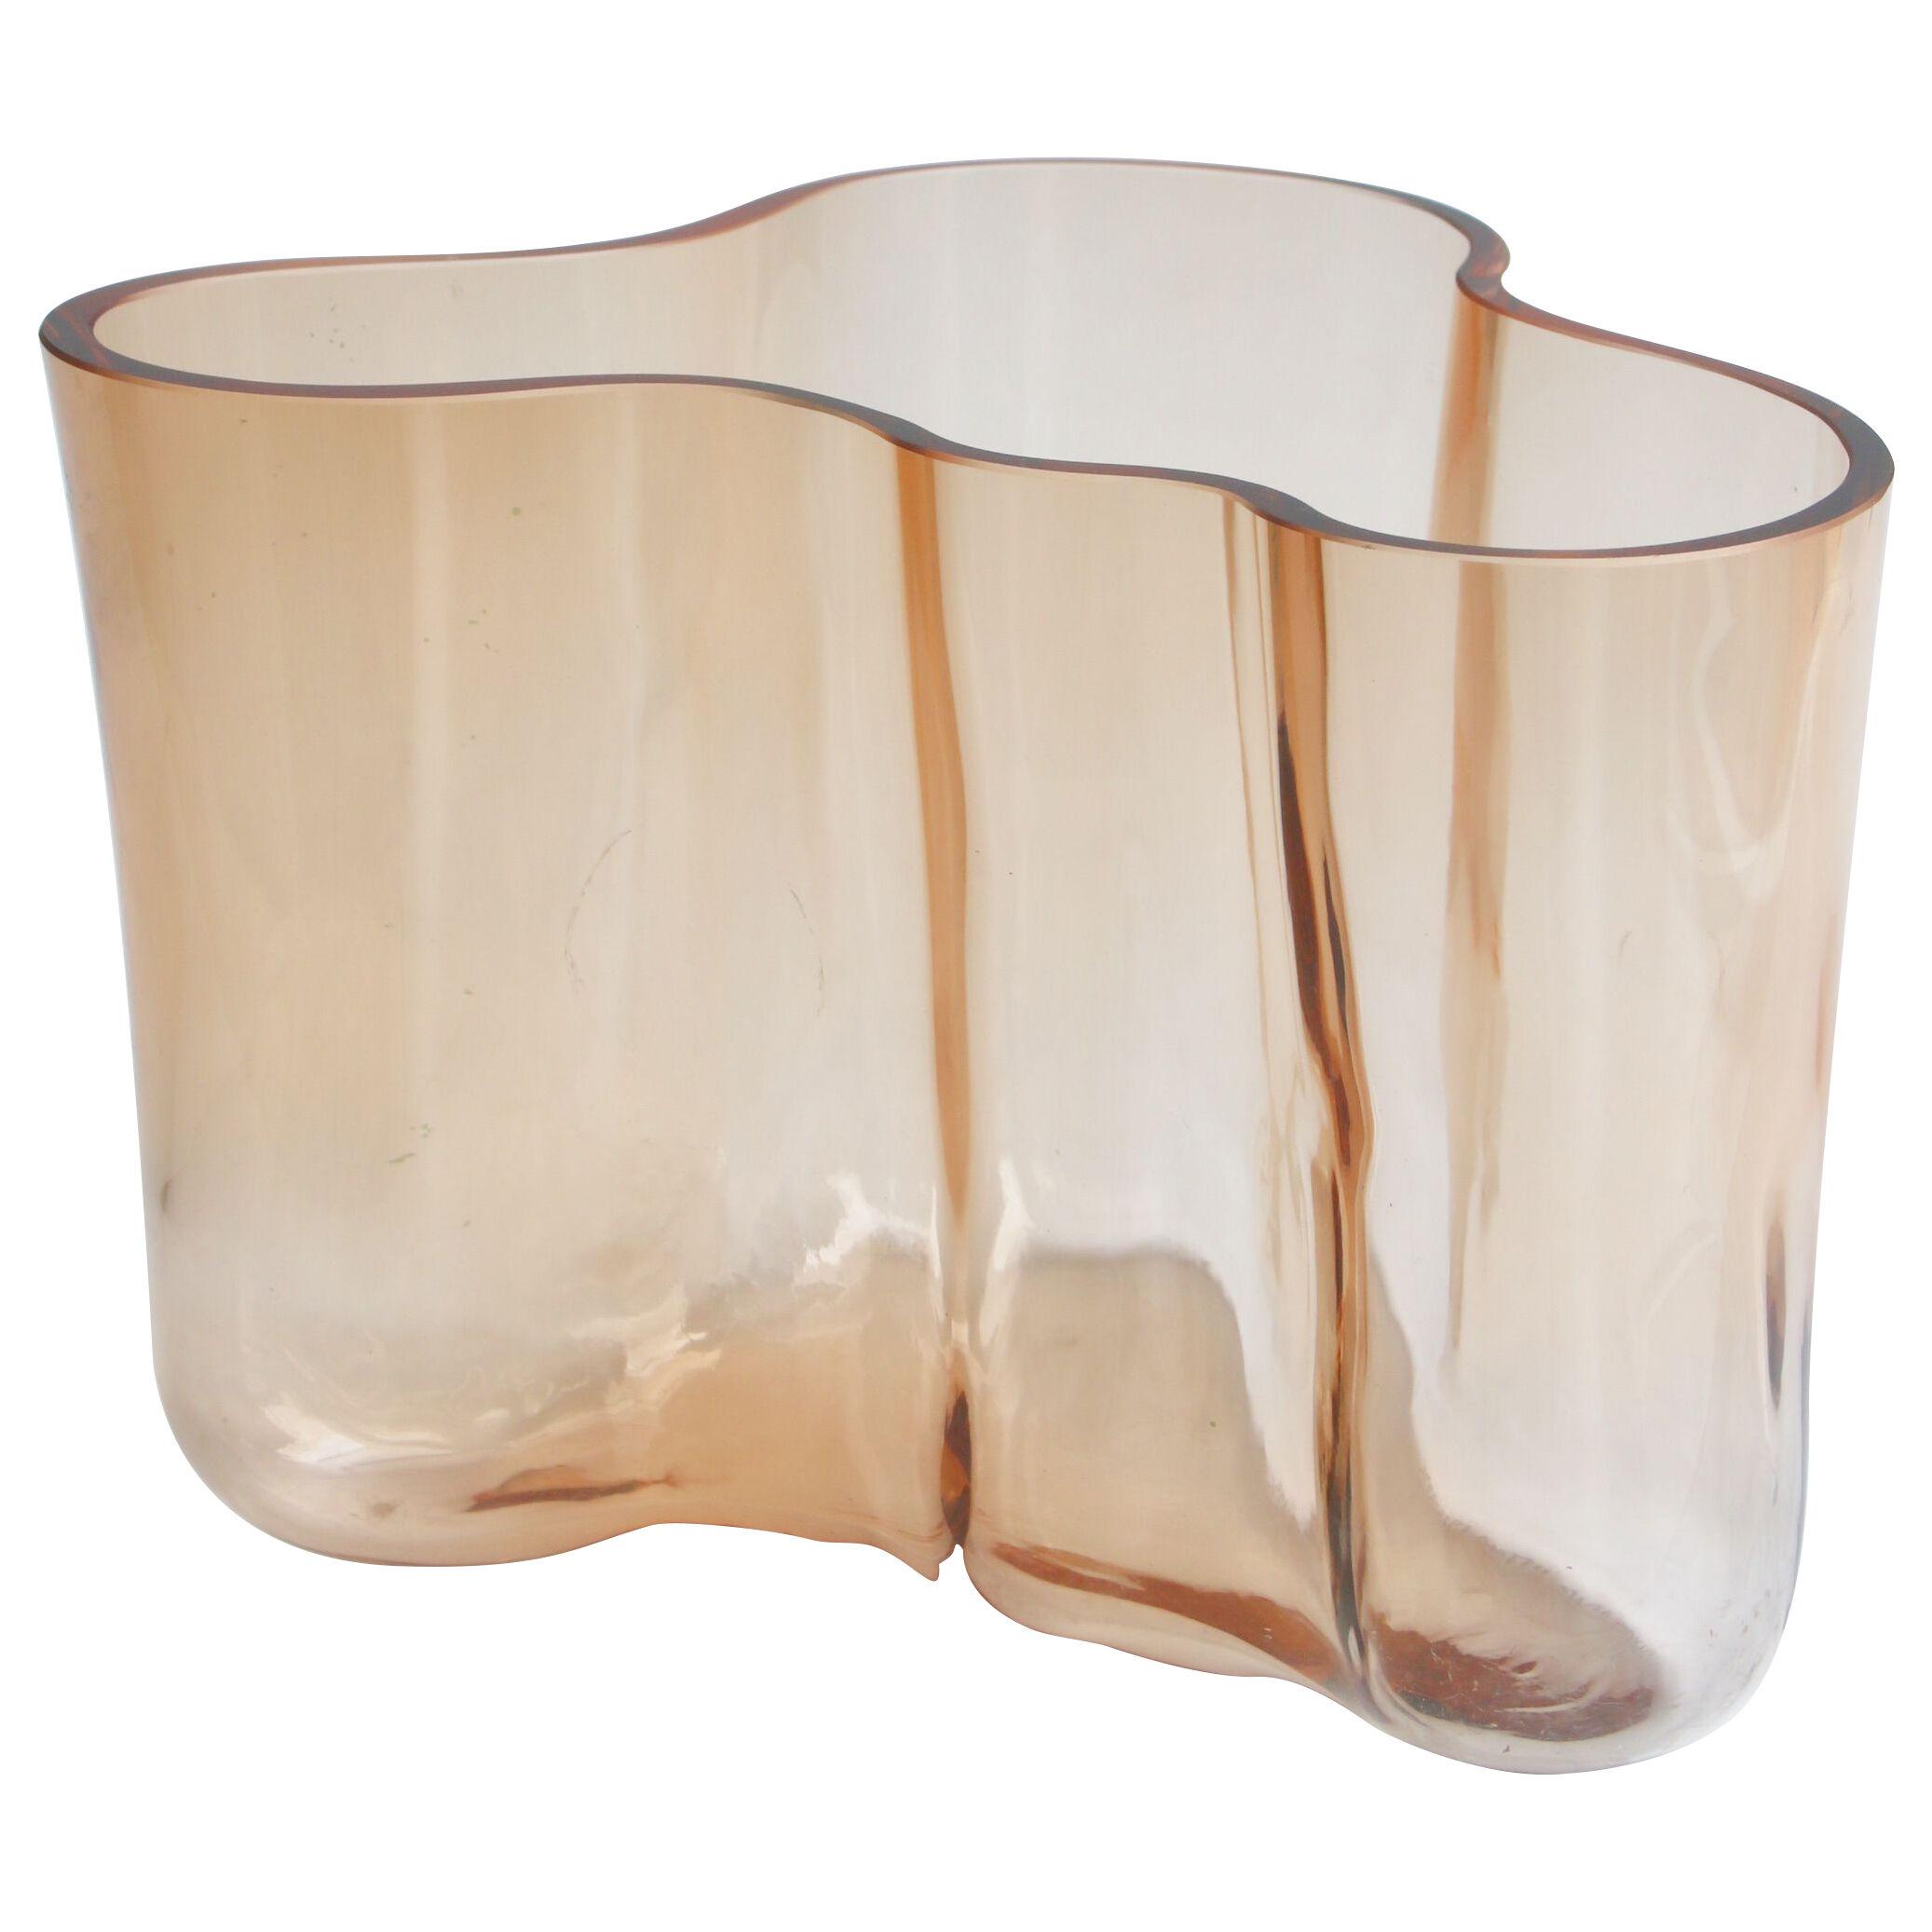 Alvar Aalto "Savoy" Vase in Brown-Tinted Glass, Iittala, Finland